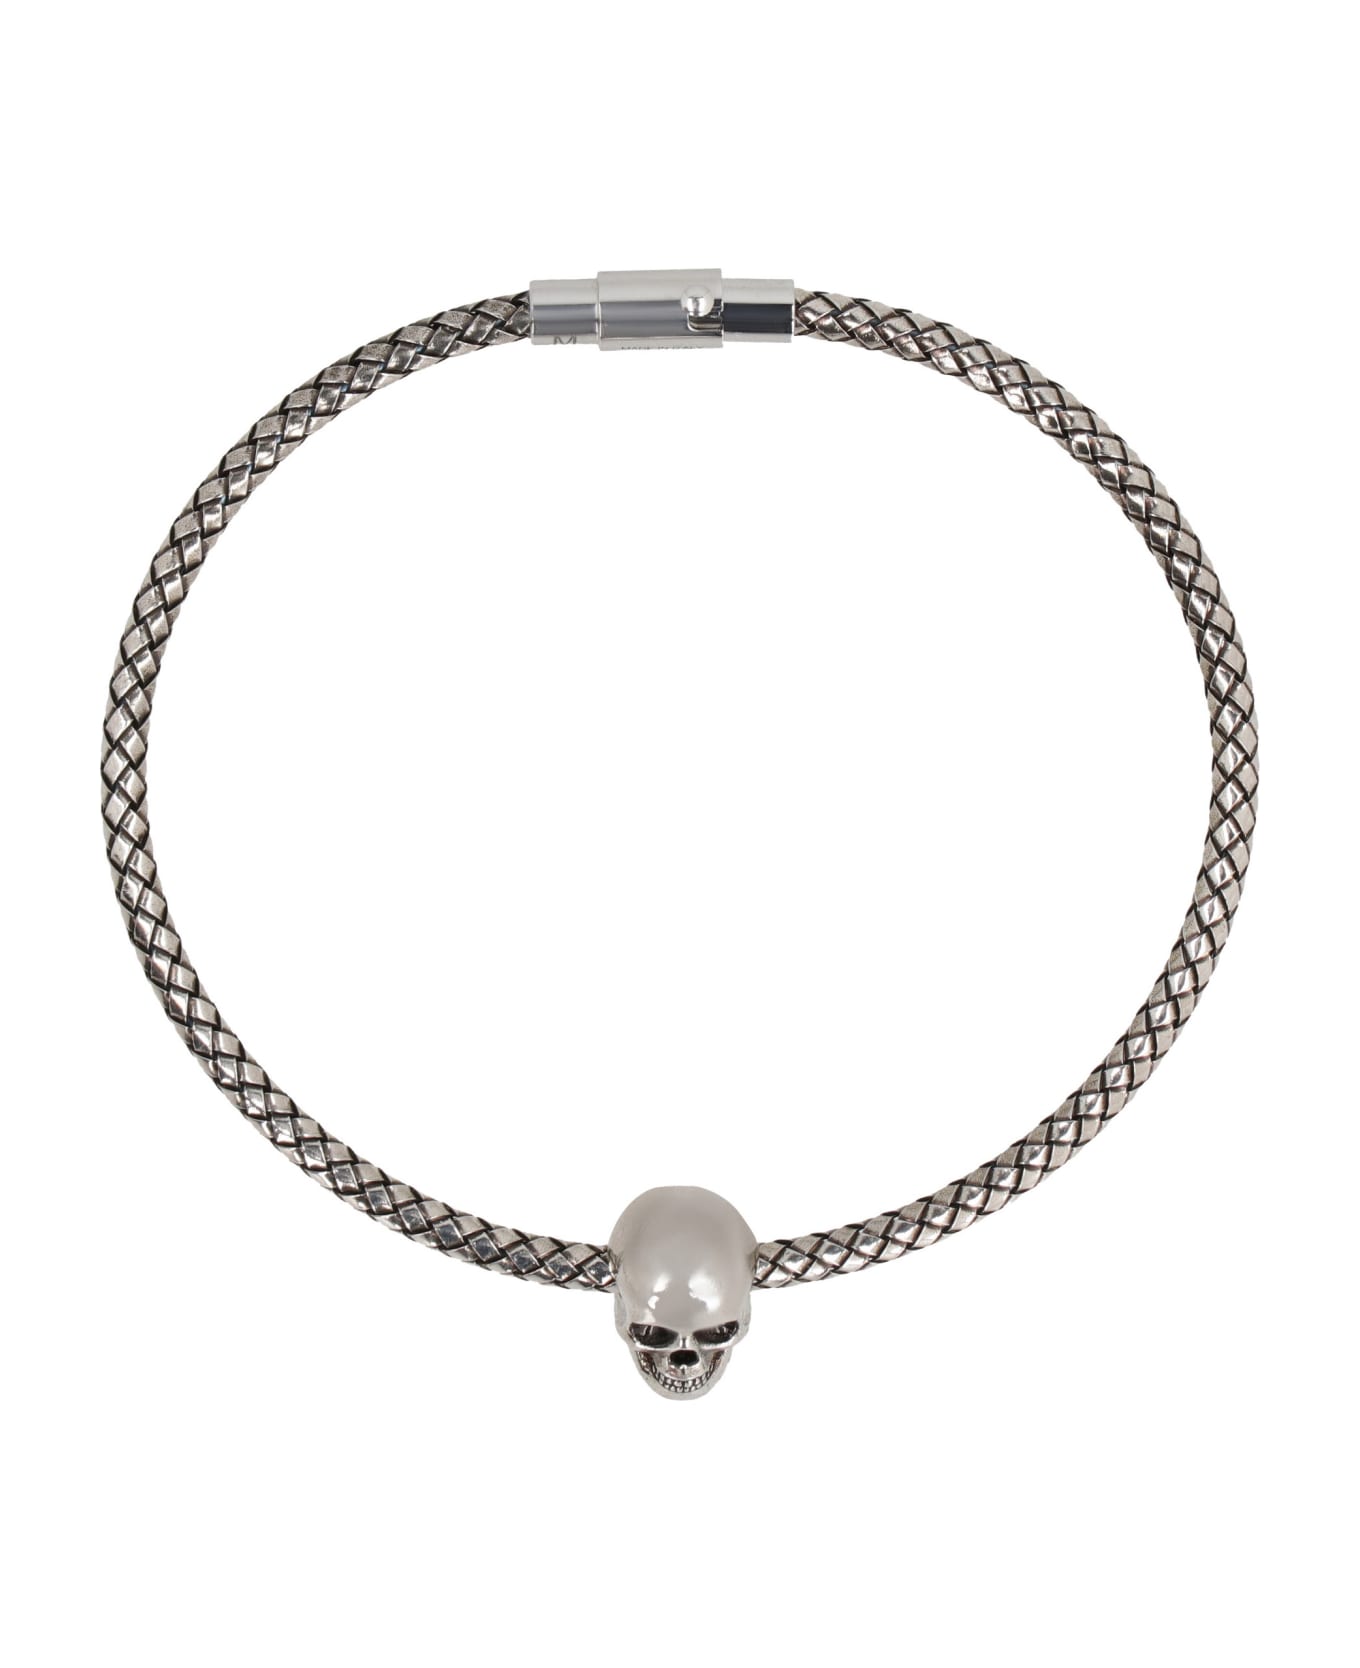 Alexander McQueen Skull Brass Bracelet - silver